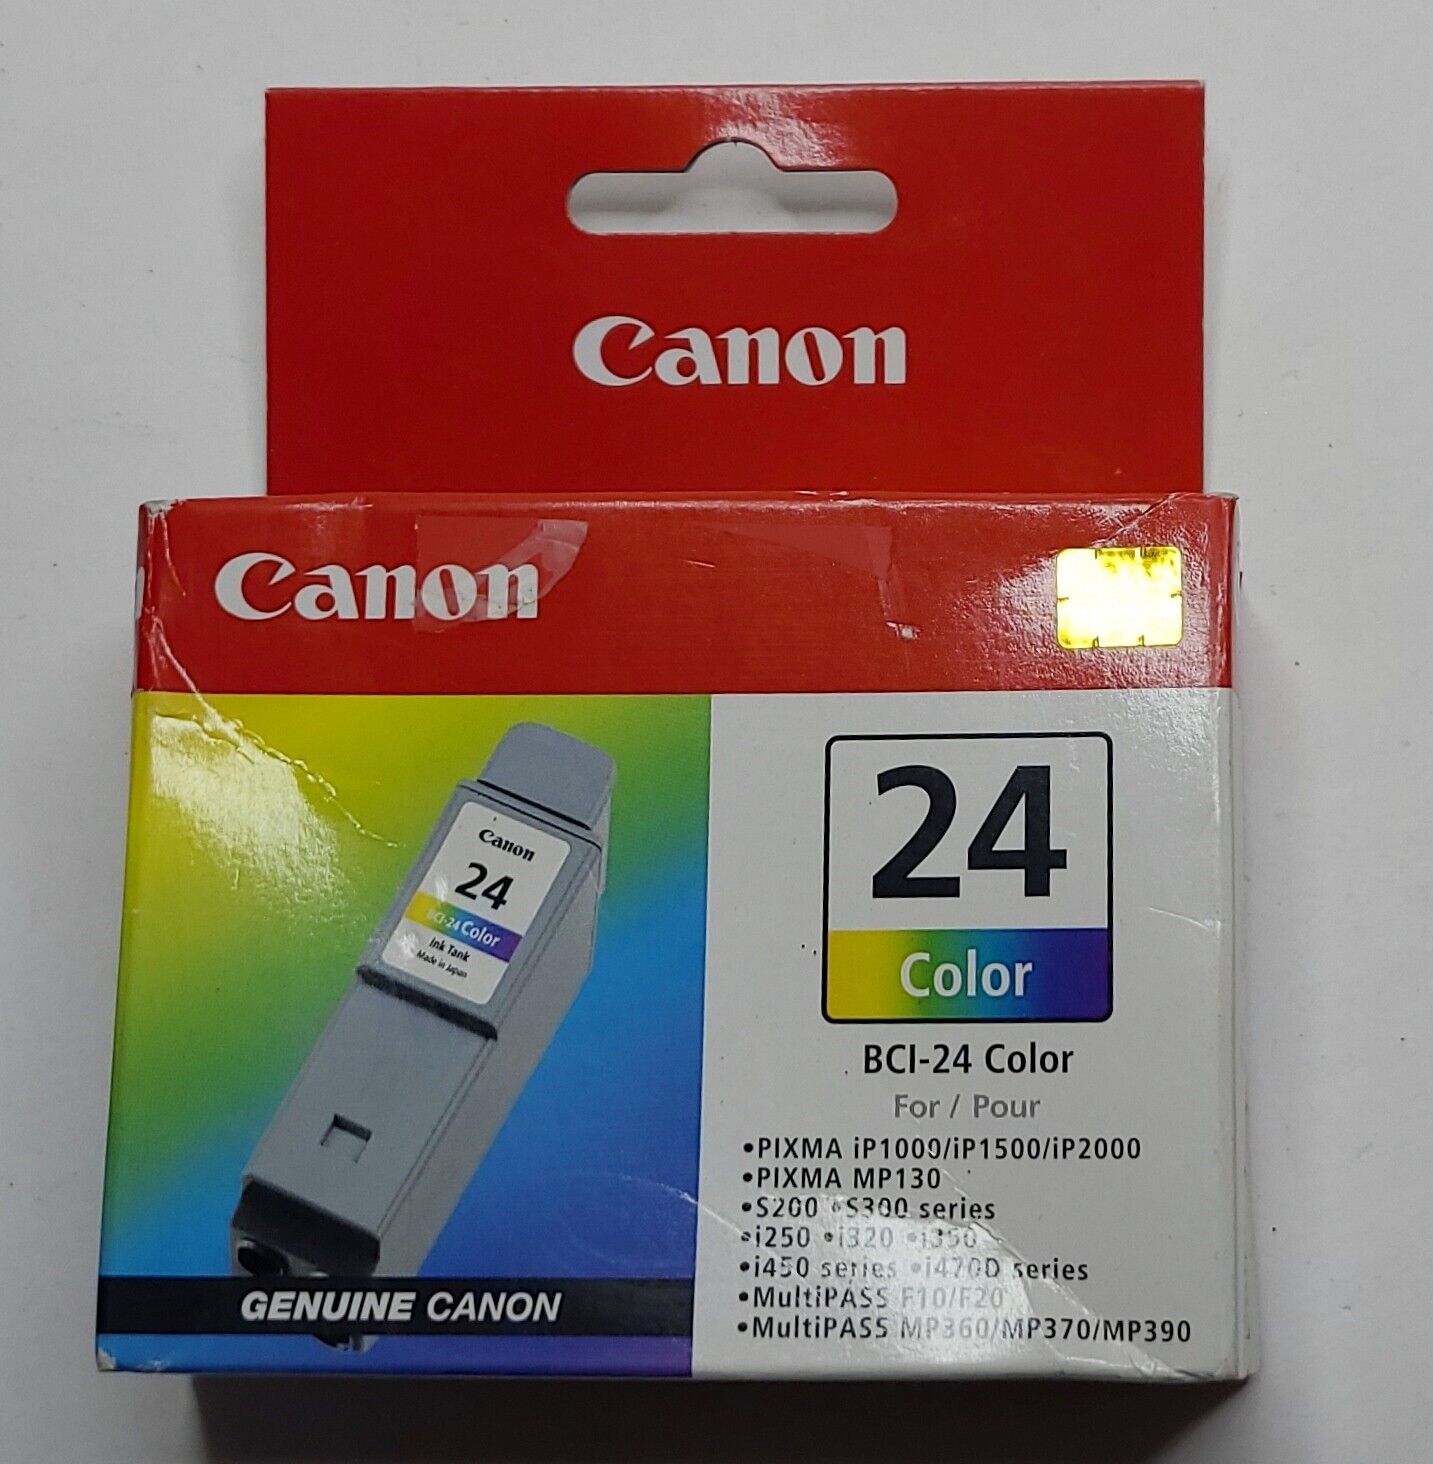 Canon BCI-24 Ink Cartridge Color GENUINE Unopened Box - Estate Find